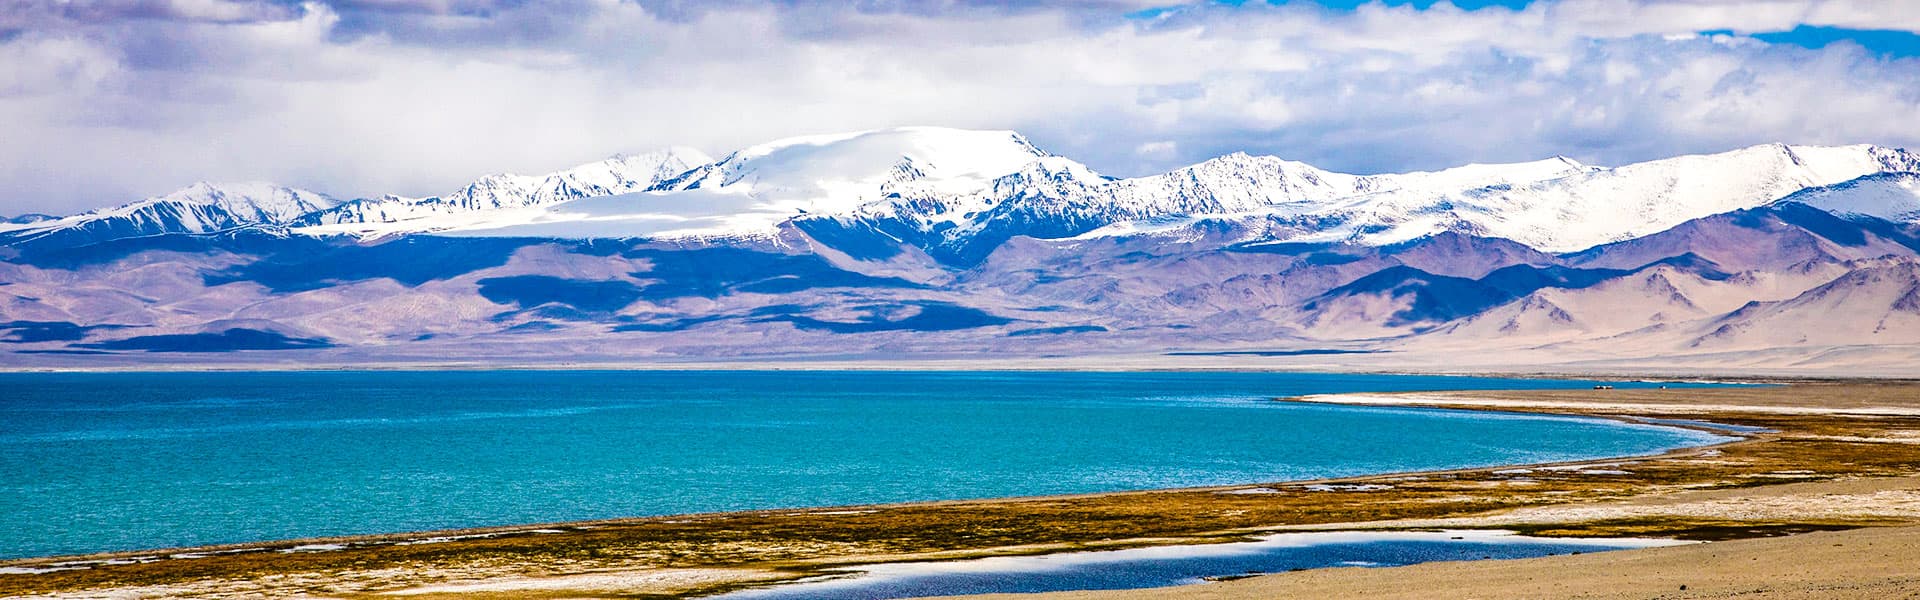 Tajikistan Pamir Plateau